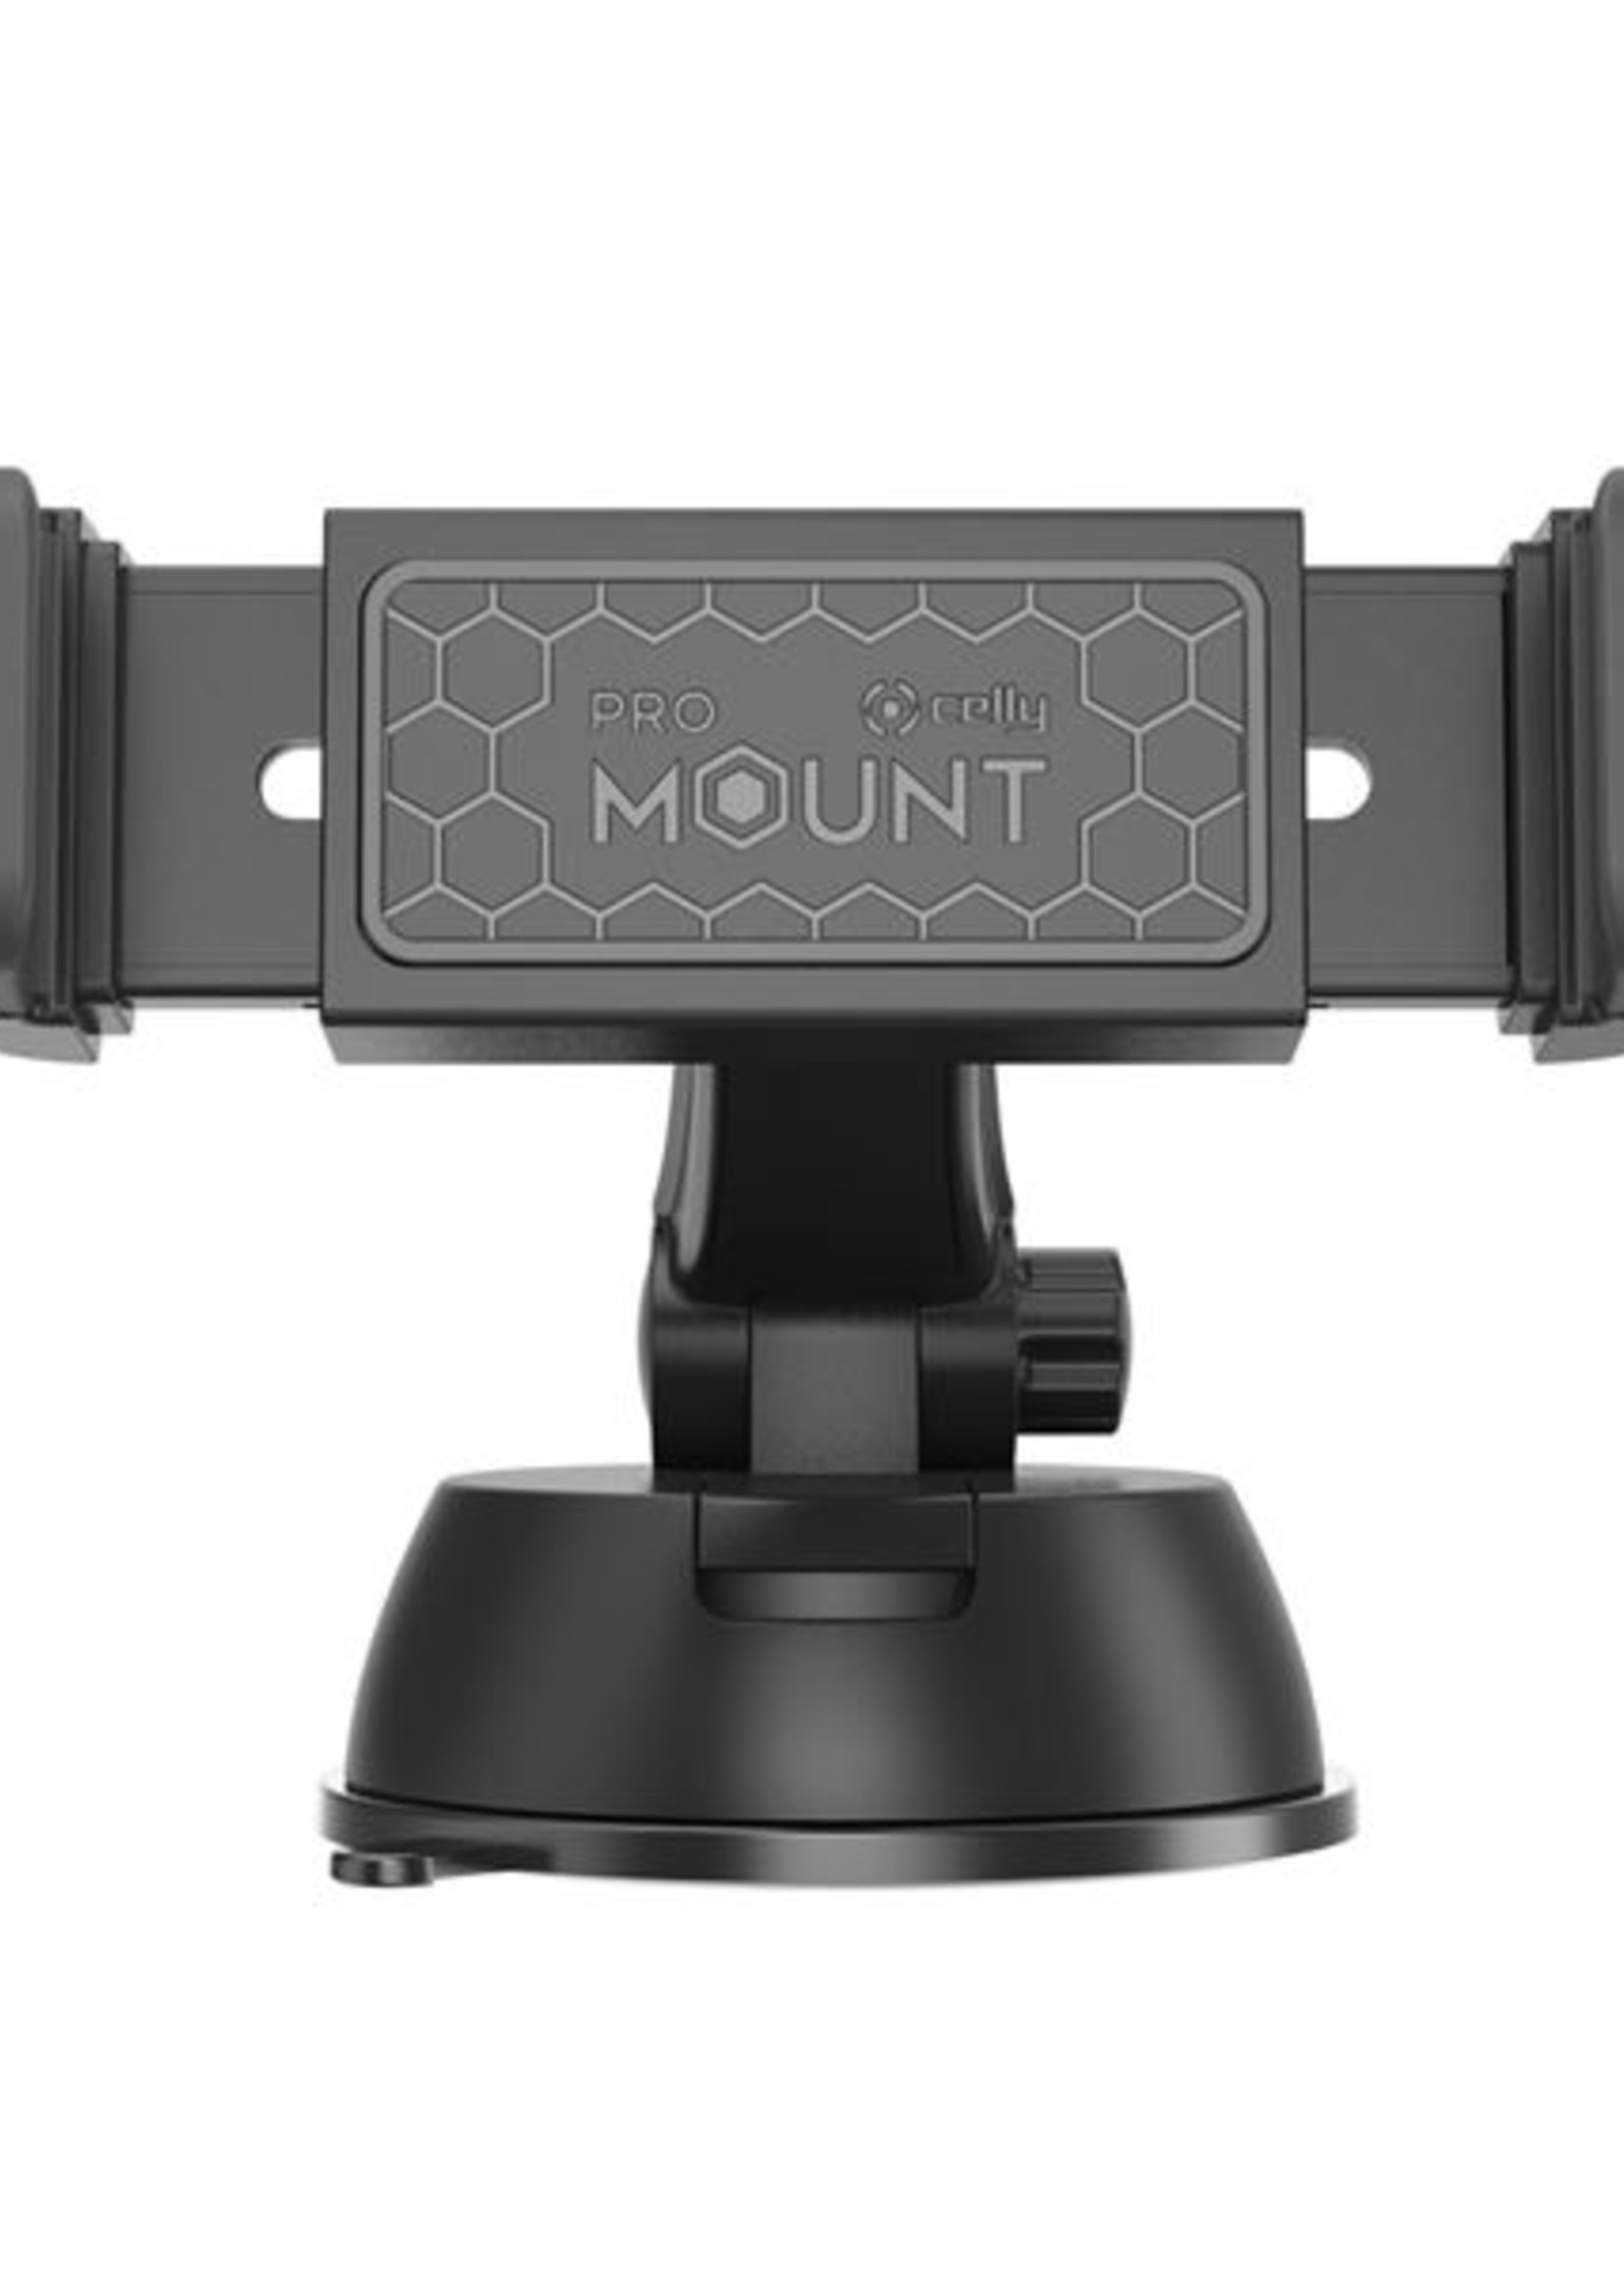 Celly MOUNTEXT - Universal Car Mount